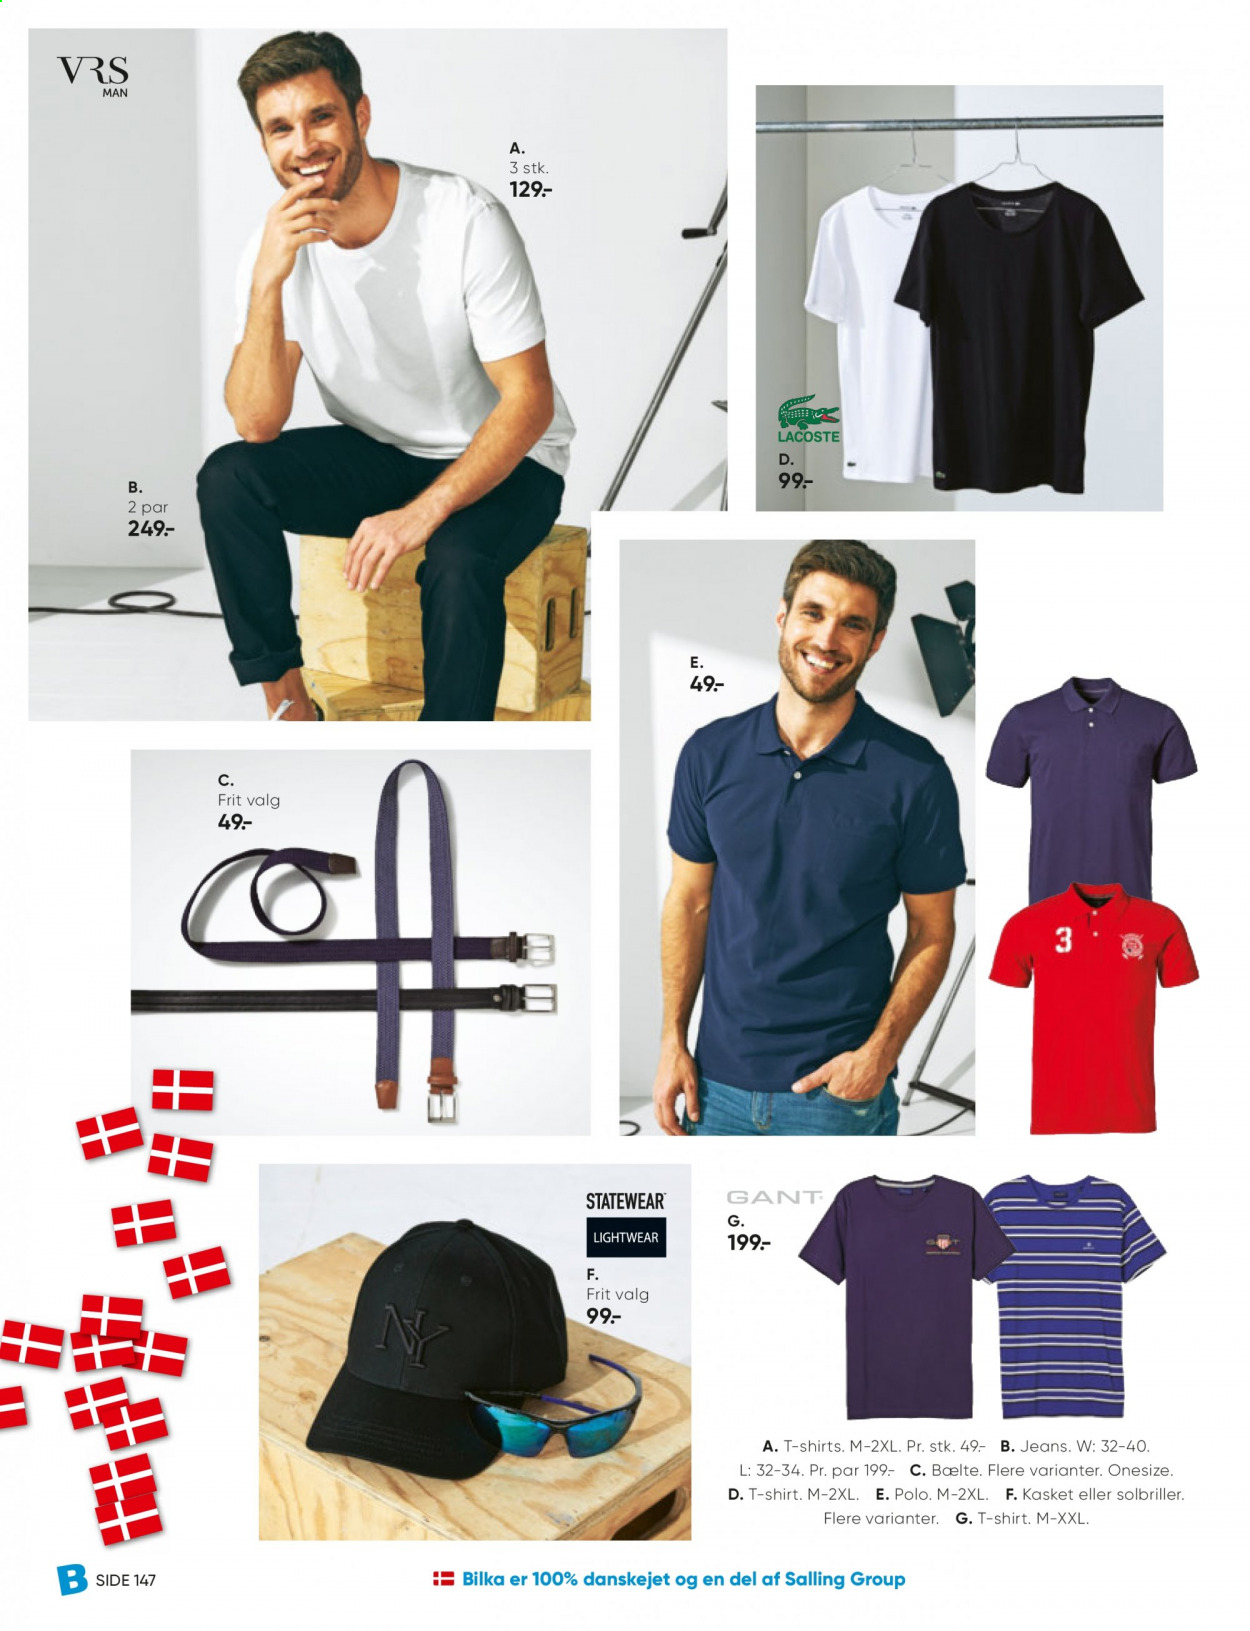 thumbnail - Bilka tilbud  - 30.7.2021 - 5.8.2021 - tilbudsprodukter - Lacoste, jeans, T-shirt. Side 160.